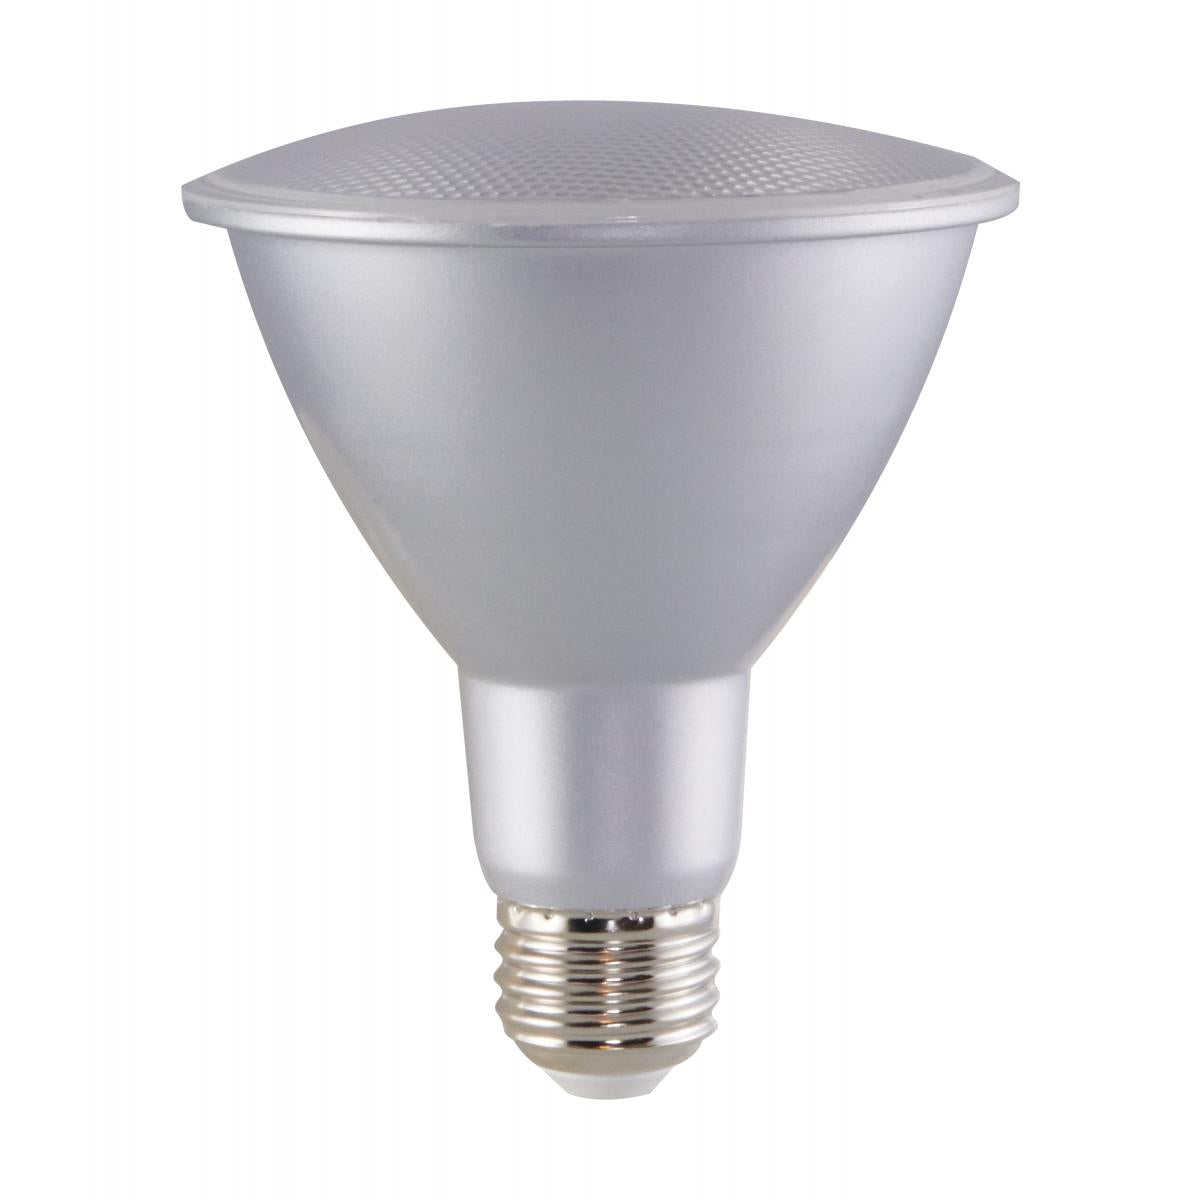 PAR30 Long Neck Reflector LED Bulb, 12 watt, 1000 Lumens, 3500K, E26 Medium Base, 40 Deg. Flood